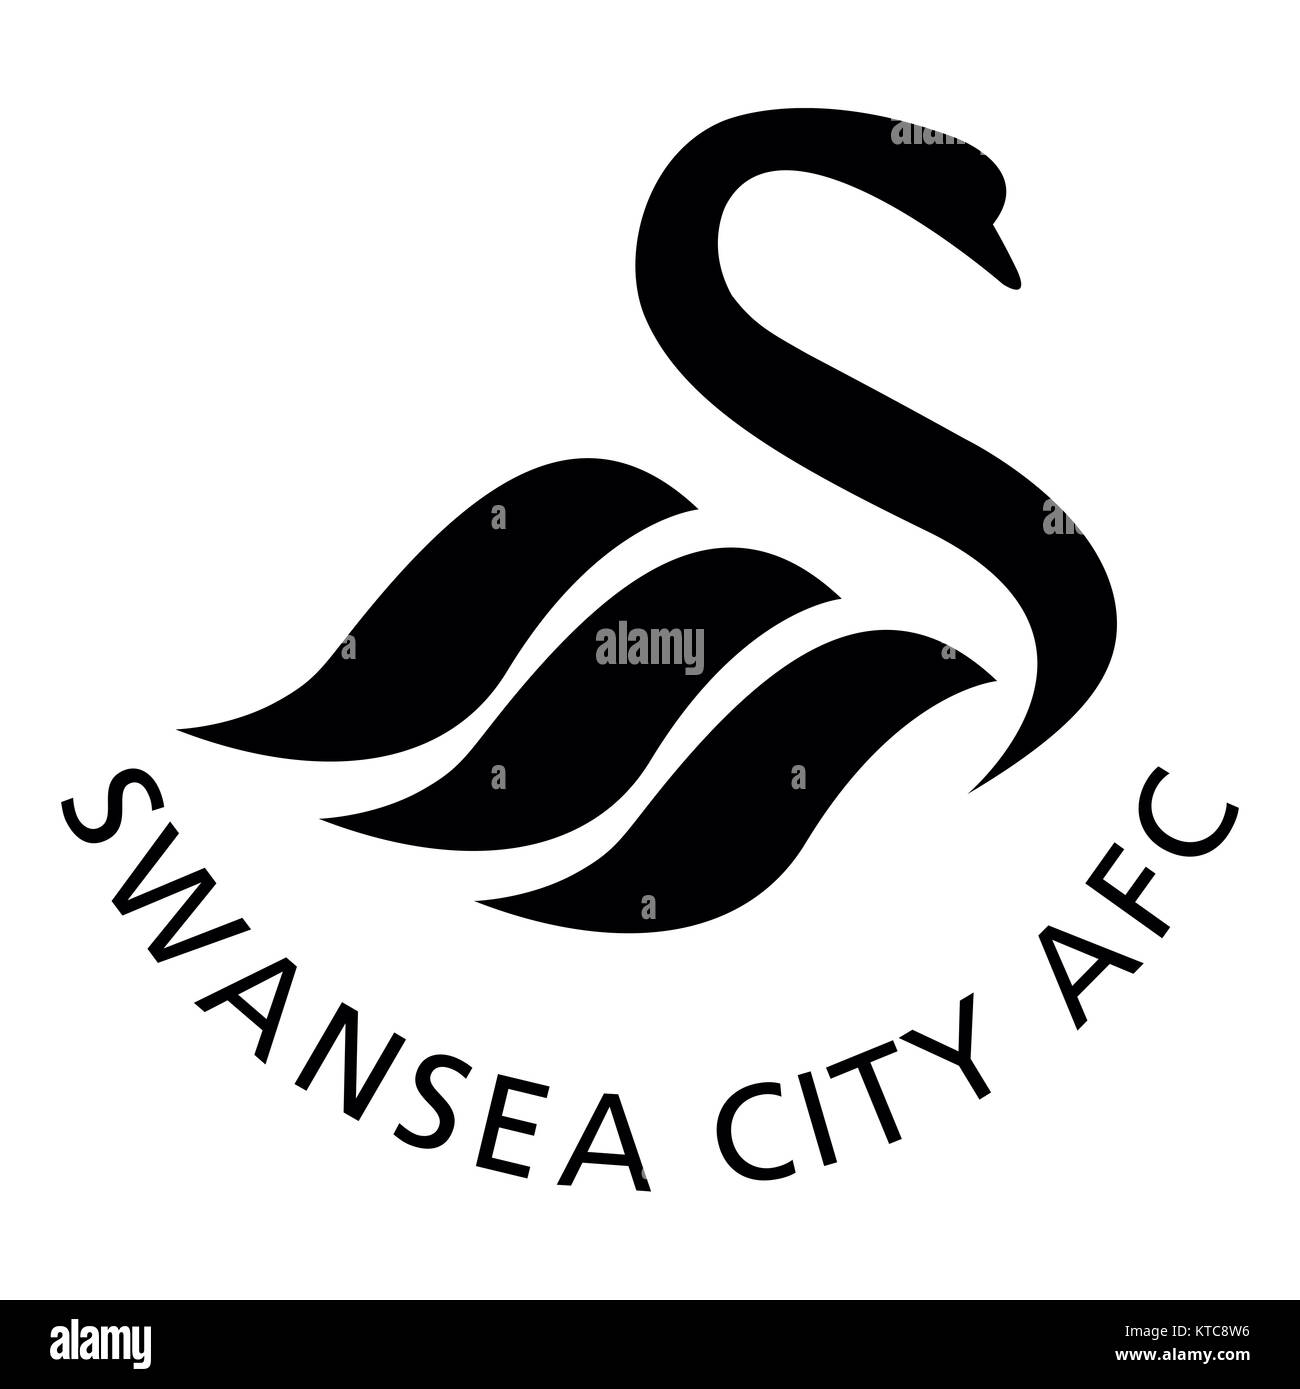 Swansea City Association Football Club Logo Stock Photo